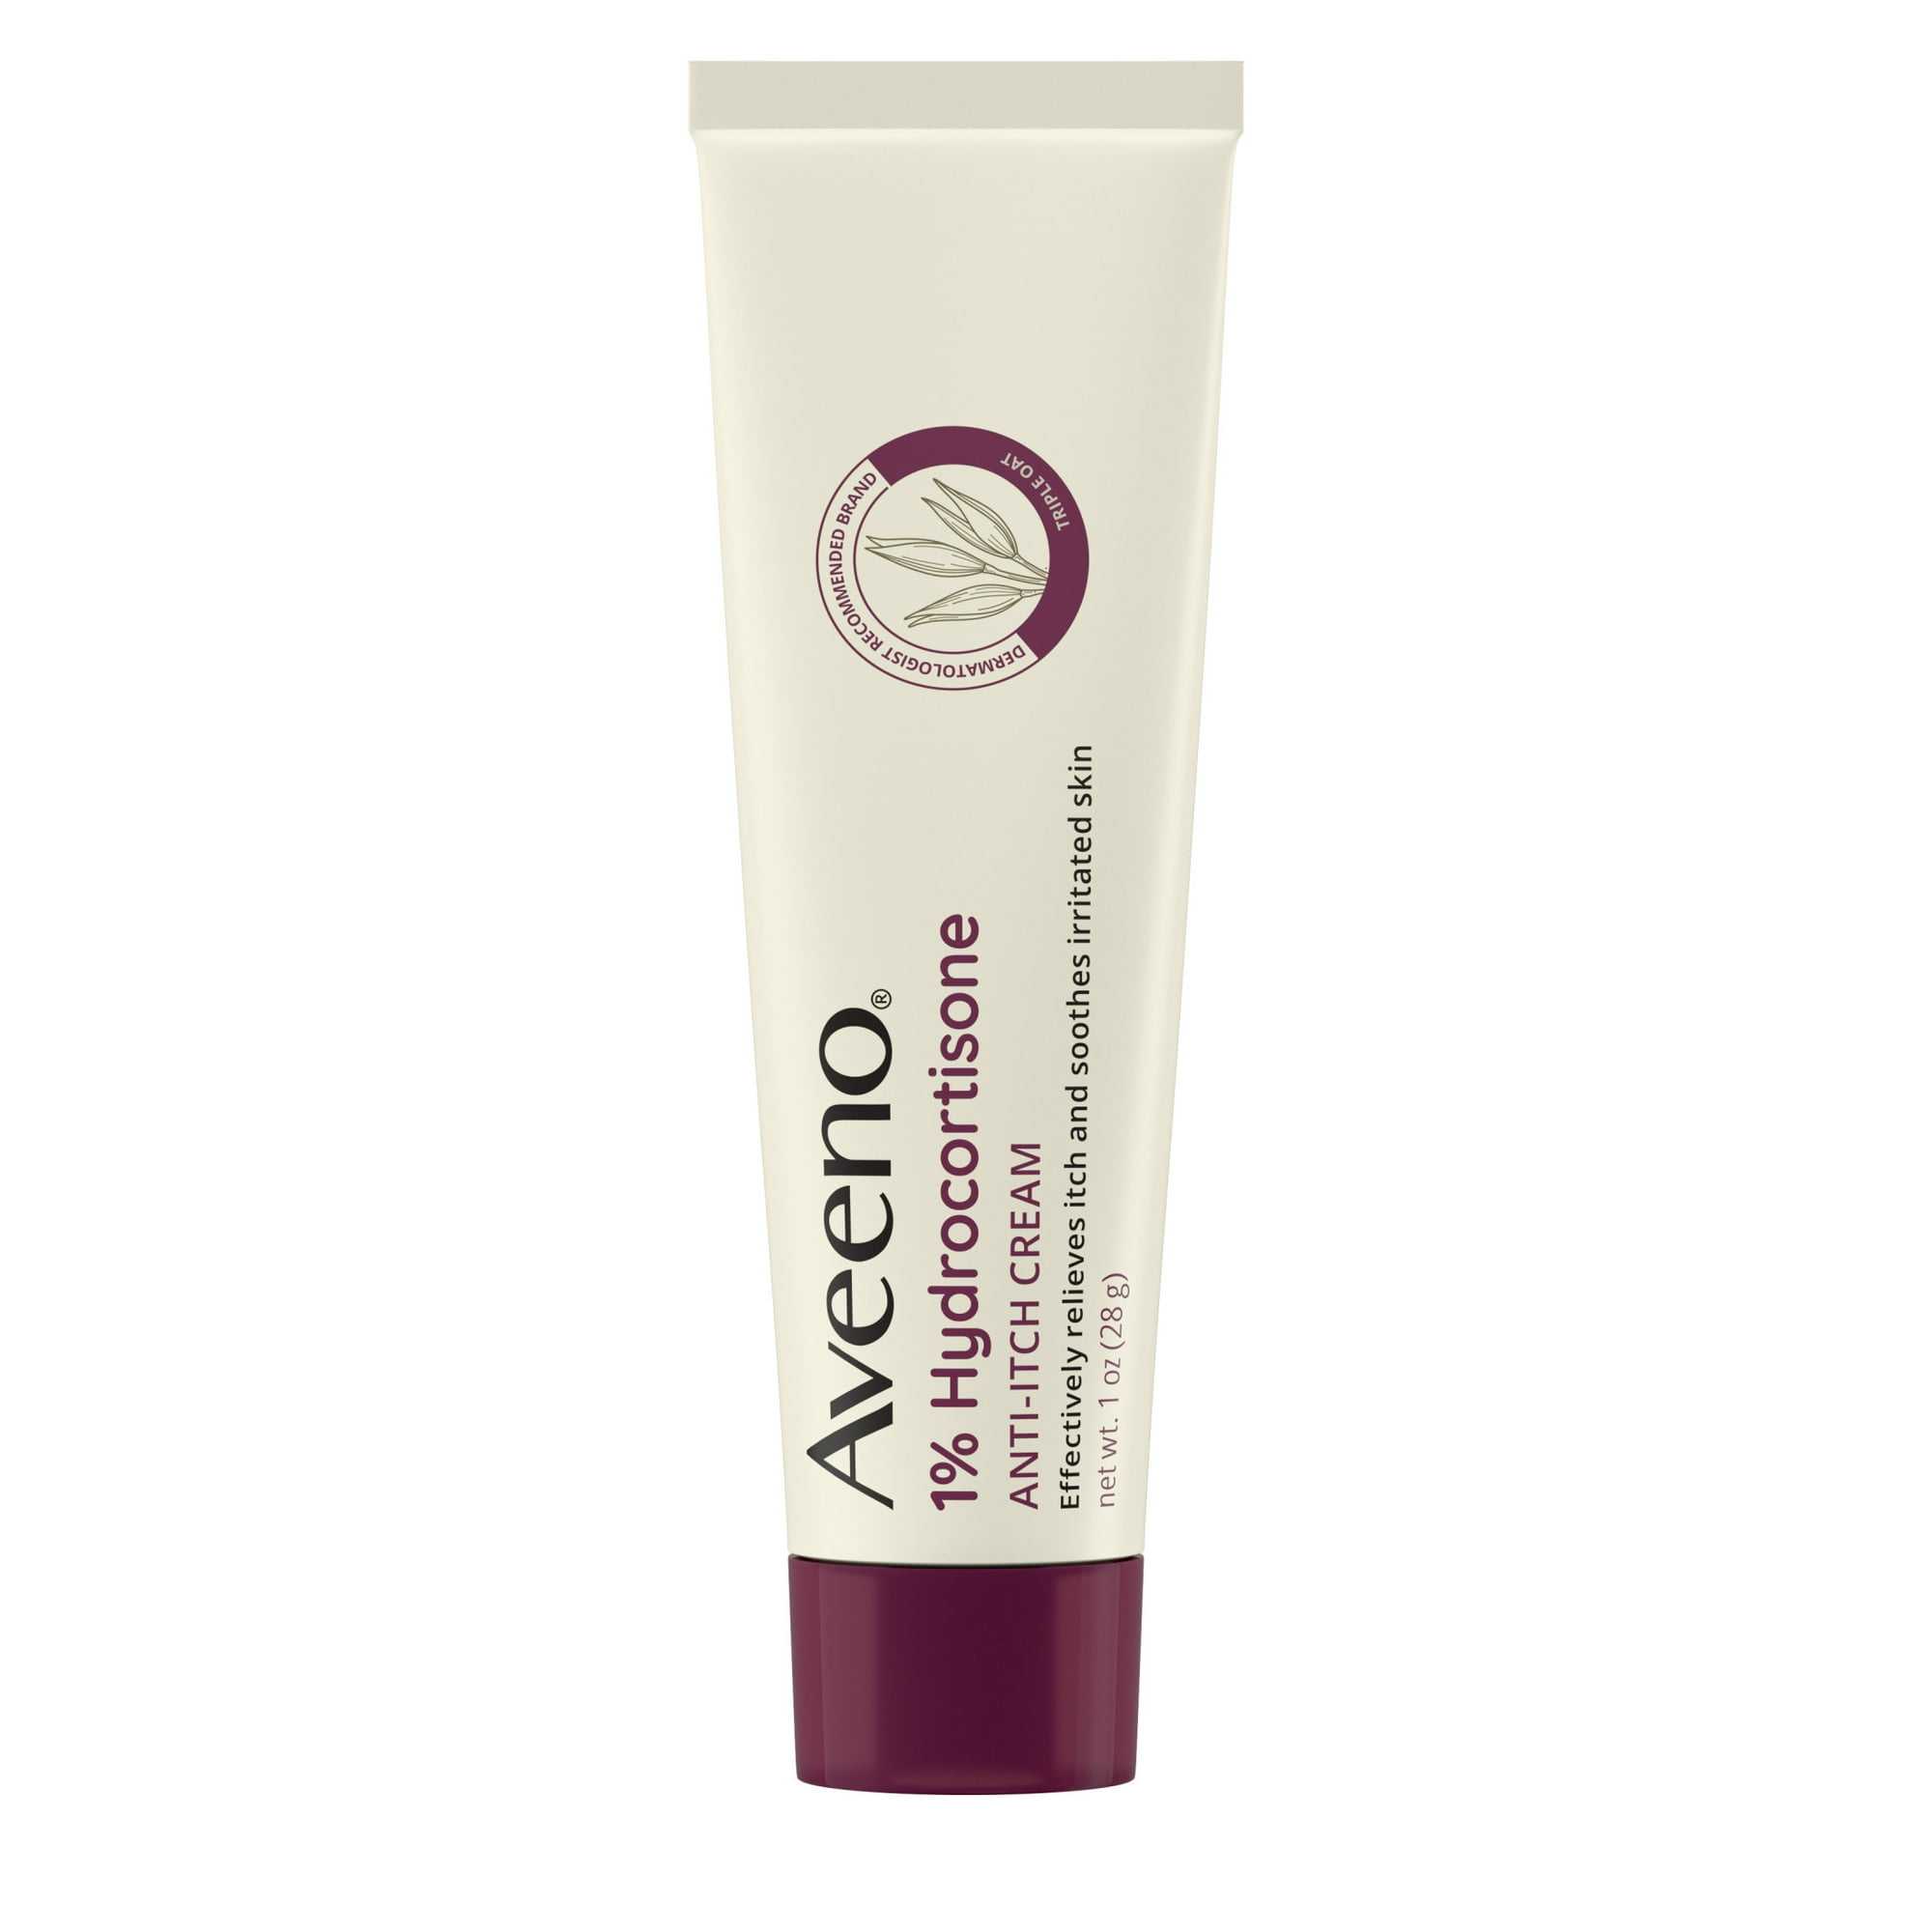 Aveeno Maximum Strength 1% Hydrocortisone Anti-Itch Cream, Triple Oat